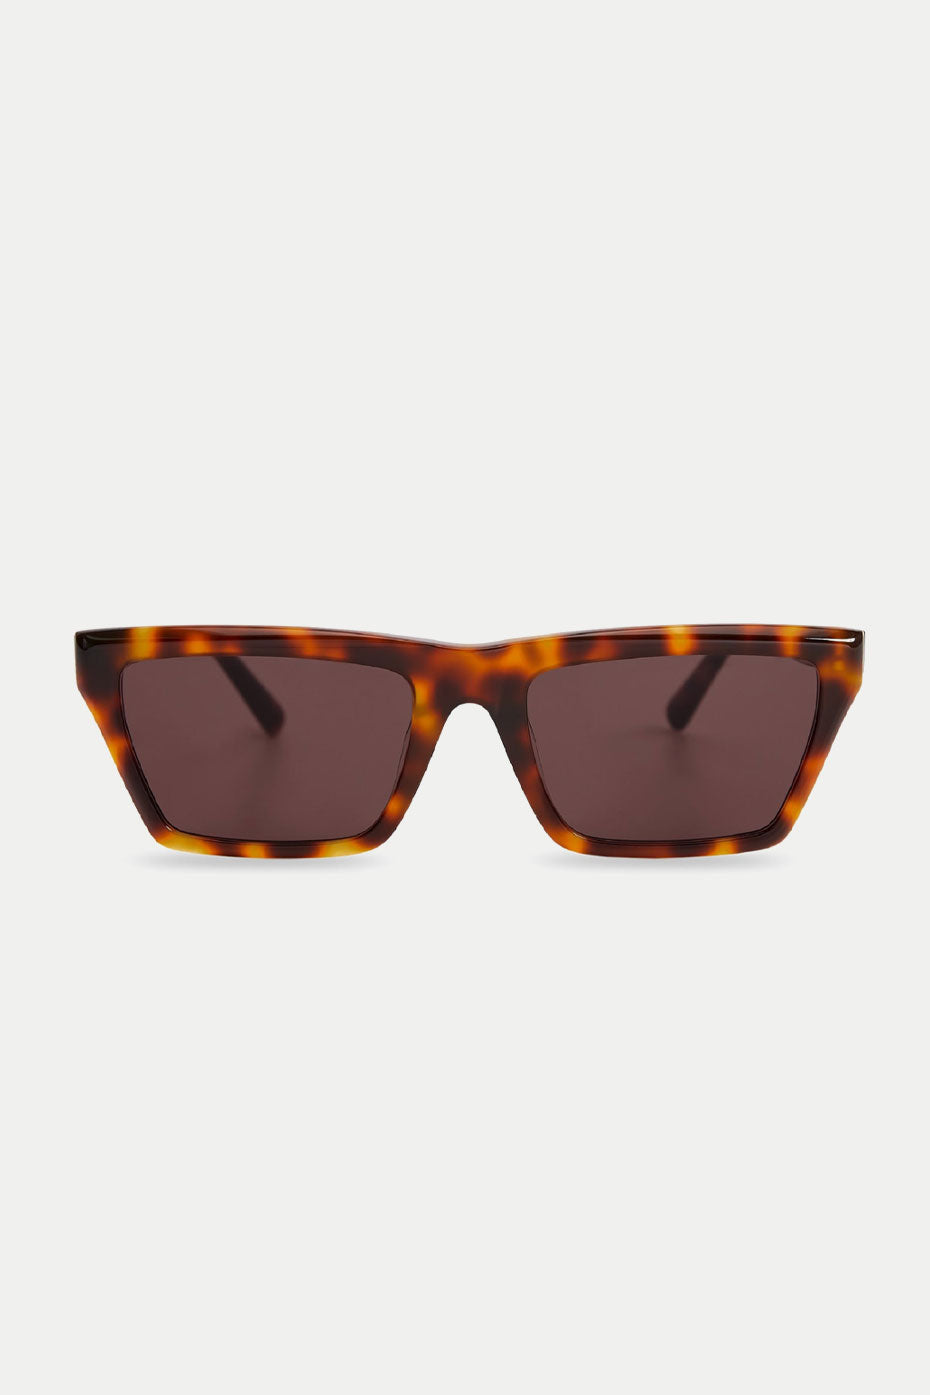 MESSYWEEKEND Brown Tortoise New Corey Sunglasses